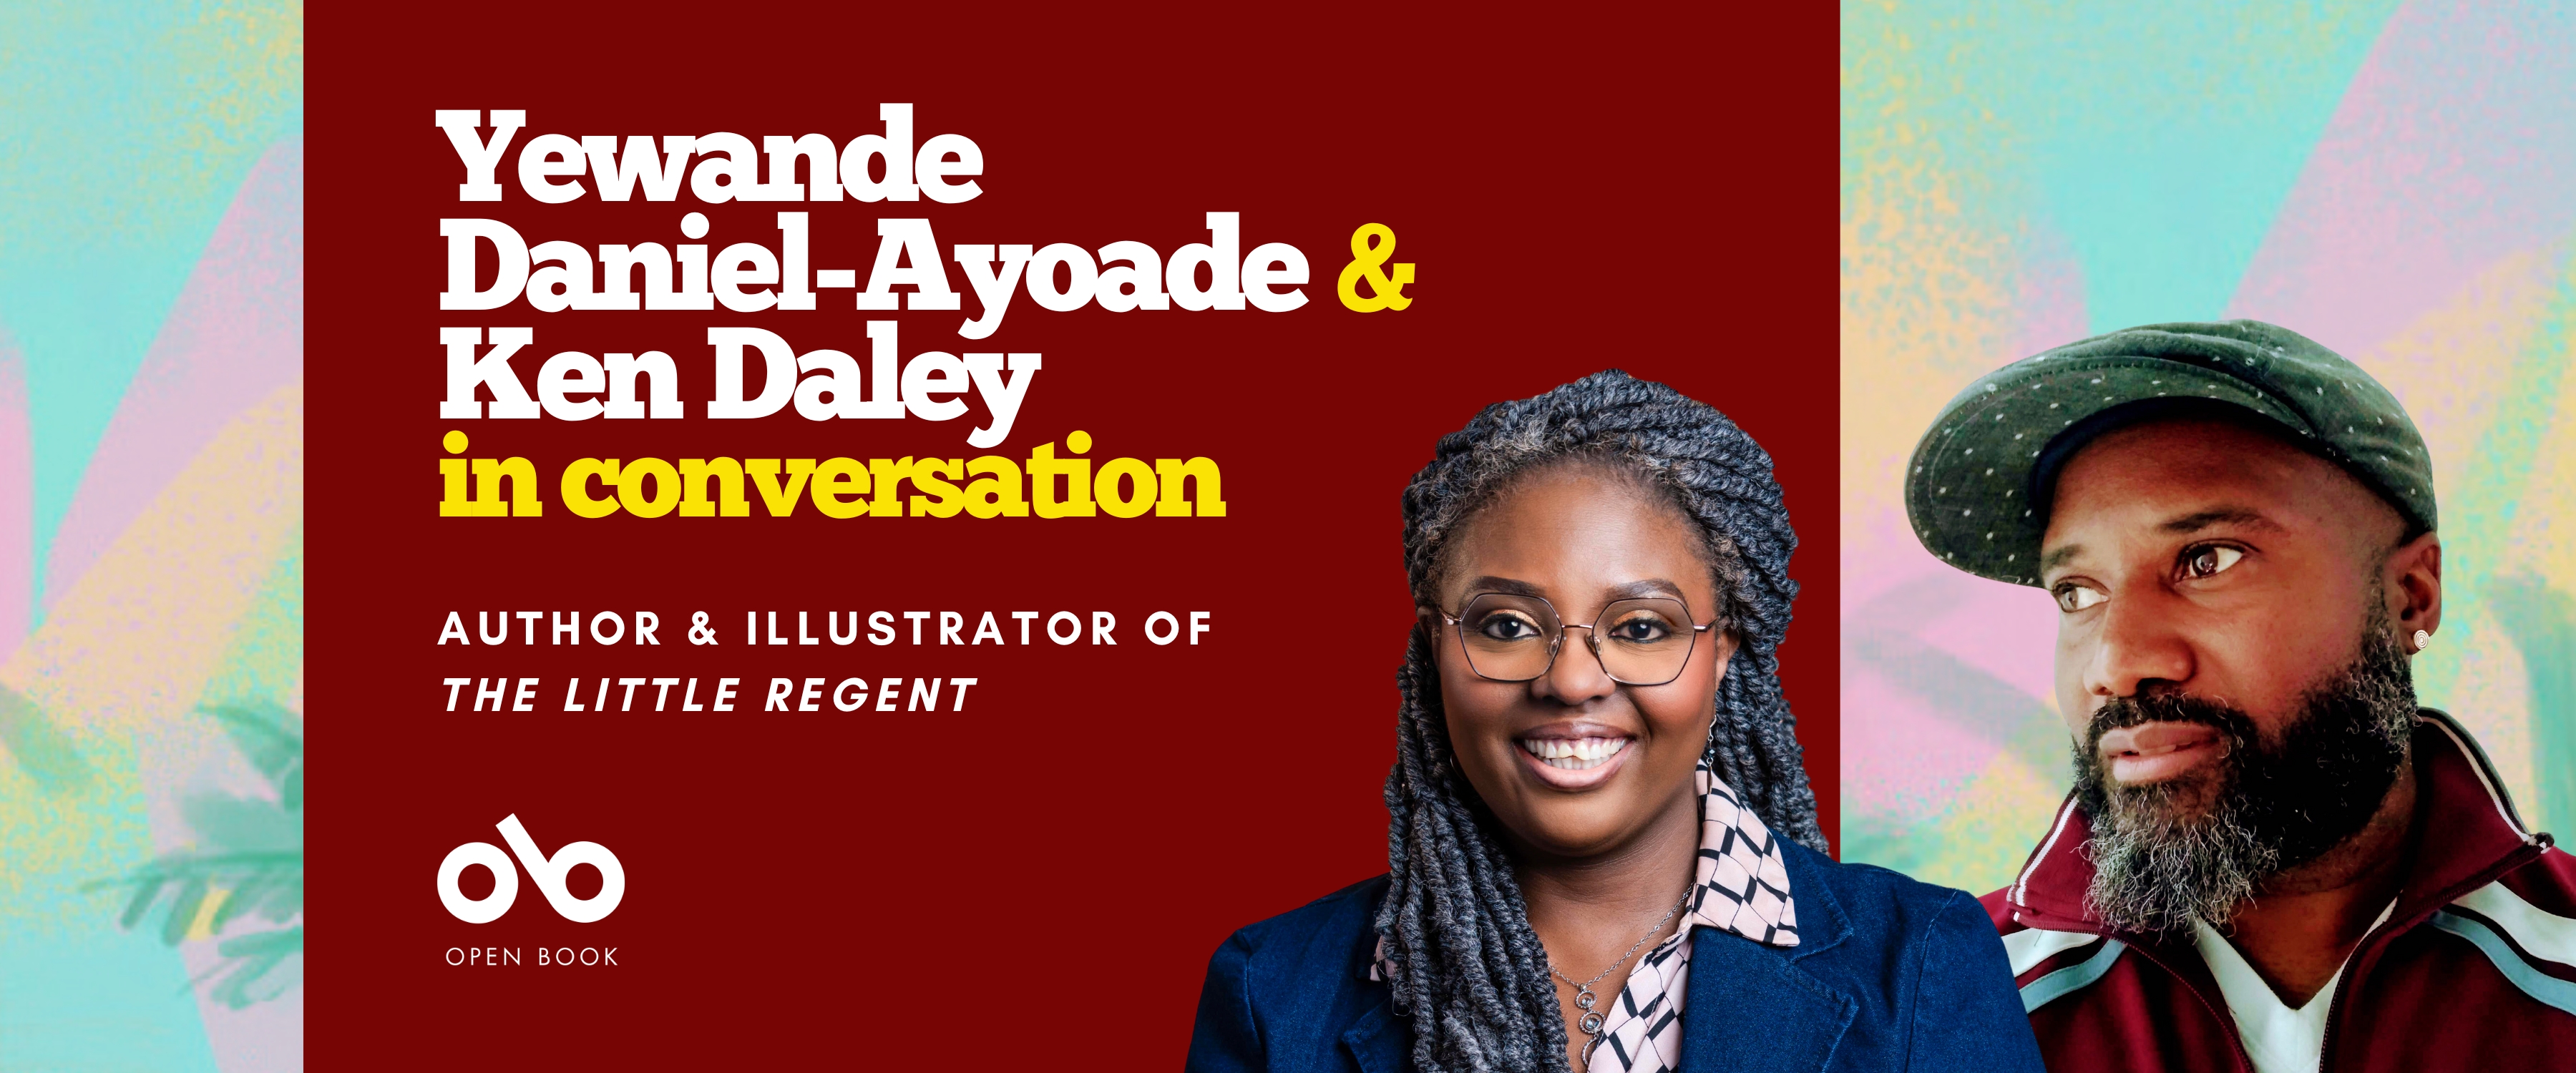 Yewande Daniel-Ayoade & Ken Daley in conversation